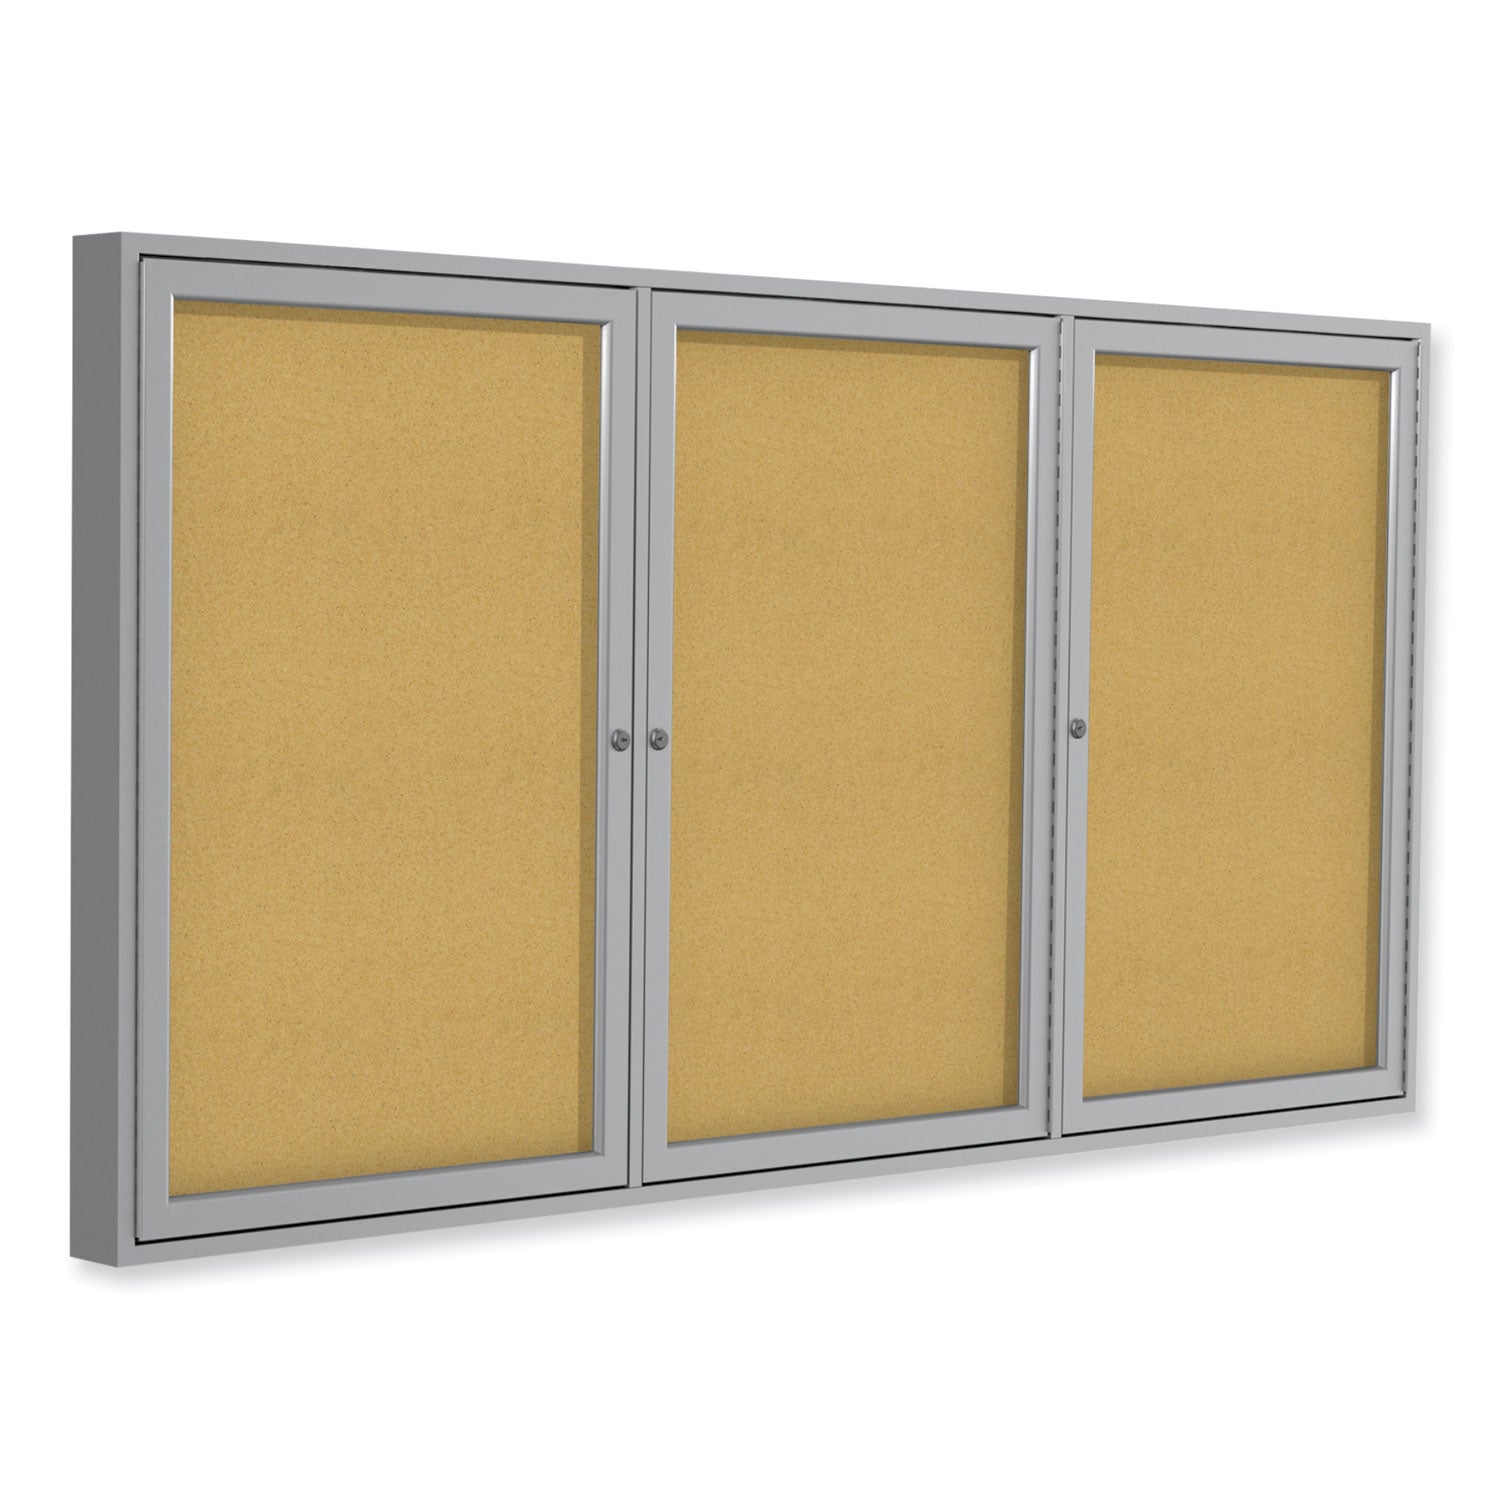 3-door-enclosed-natural-cork-bulletin-board-with-satin-aluminum-frame-96-x-48-tan-surface-ships-in-7-10-business-days_ghepa34896k - 1